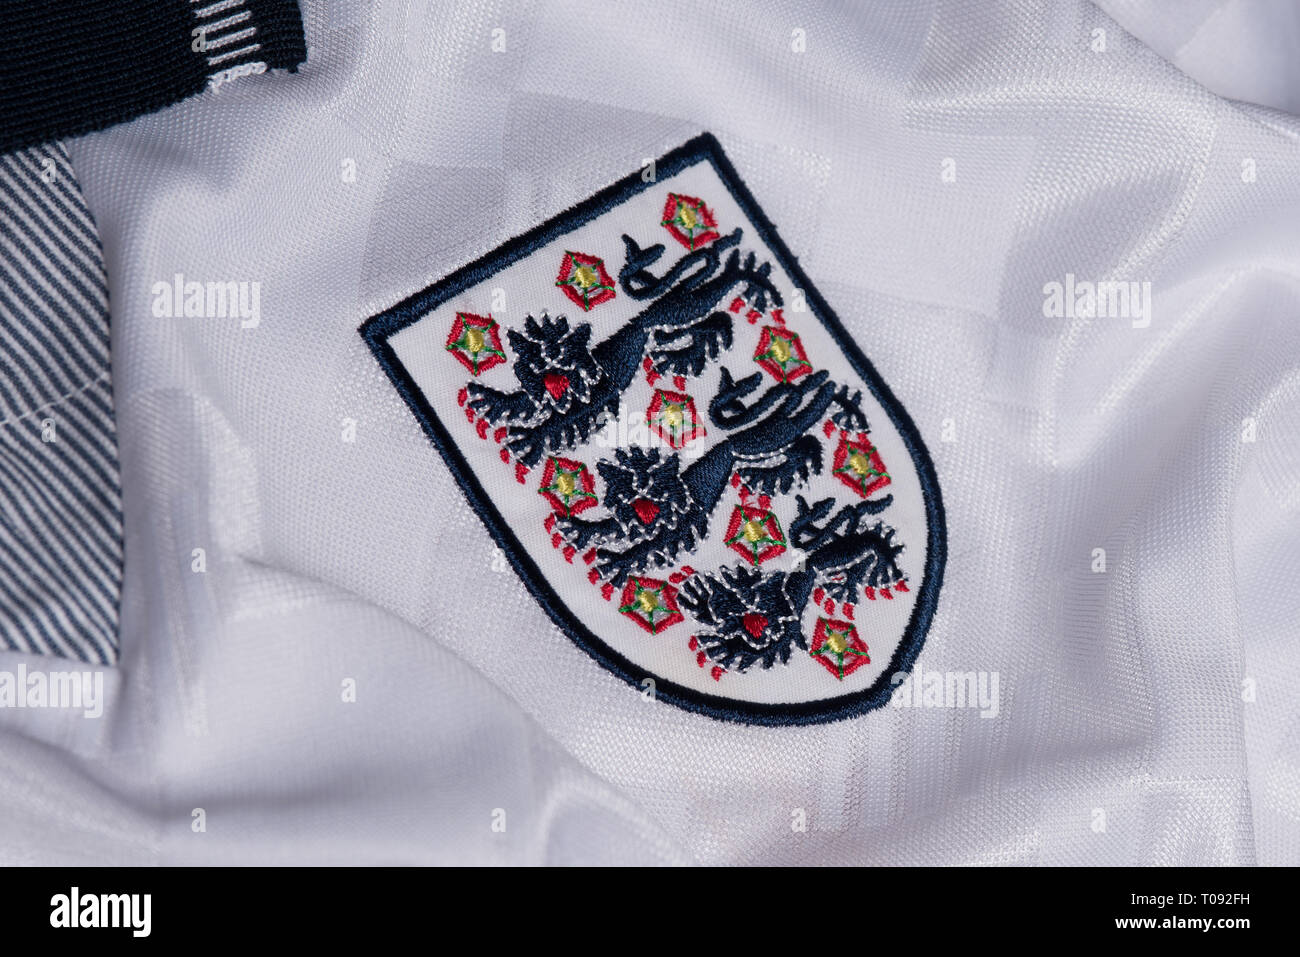 Close up of England National Football team kit for Italia 90. Stock Photo